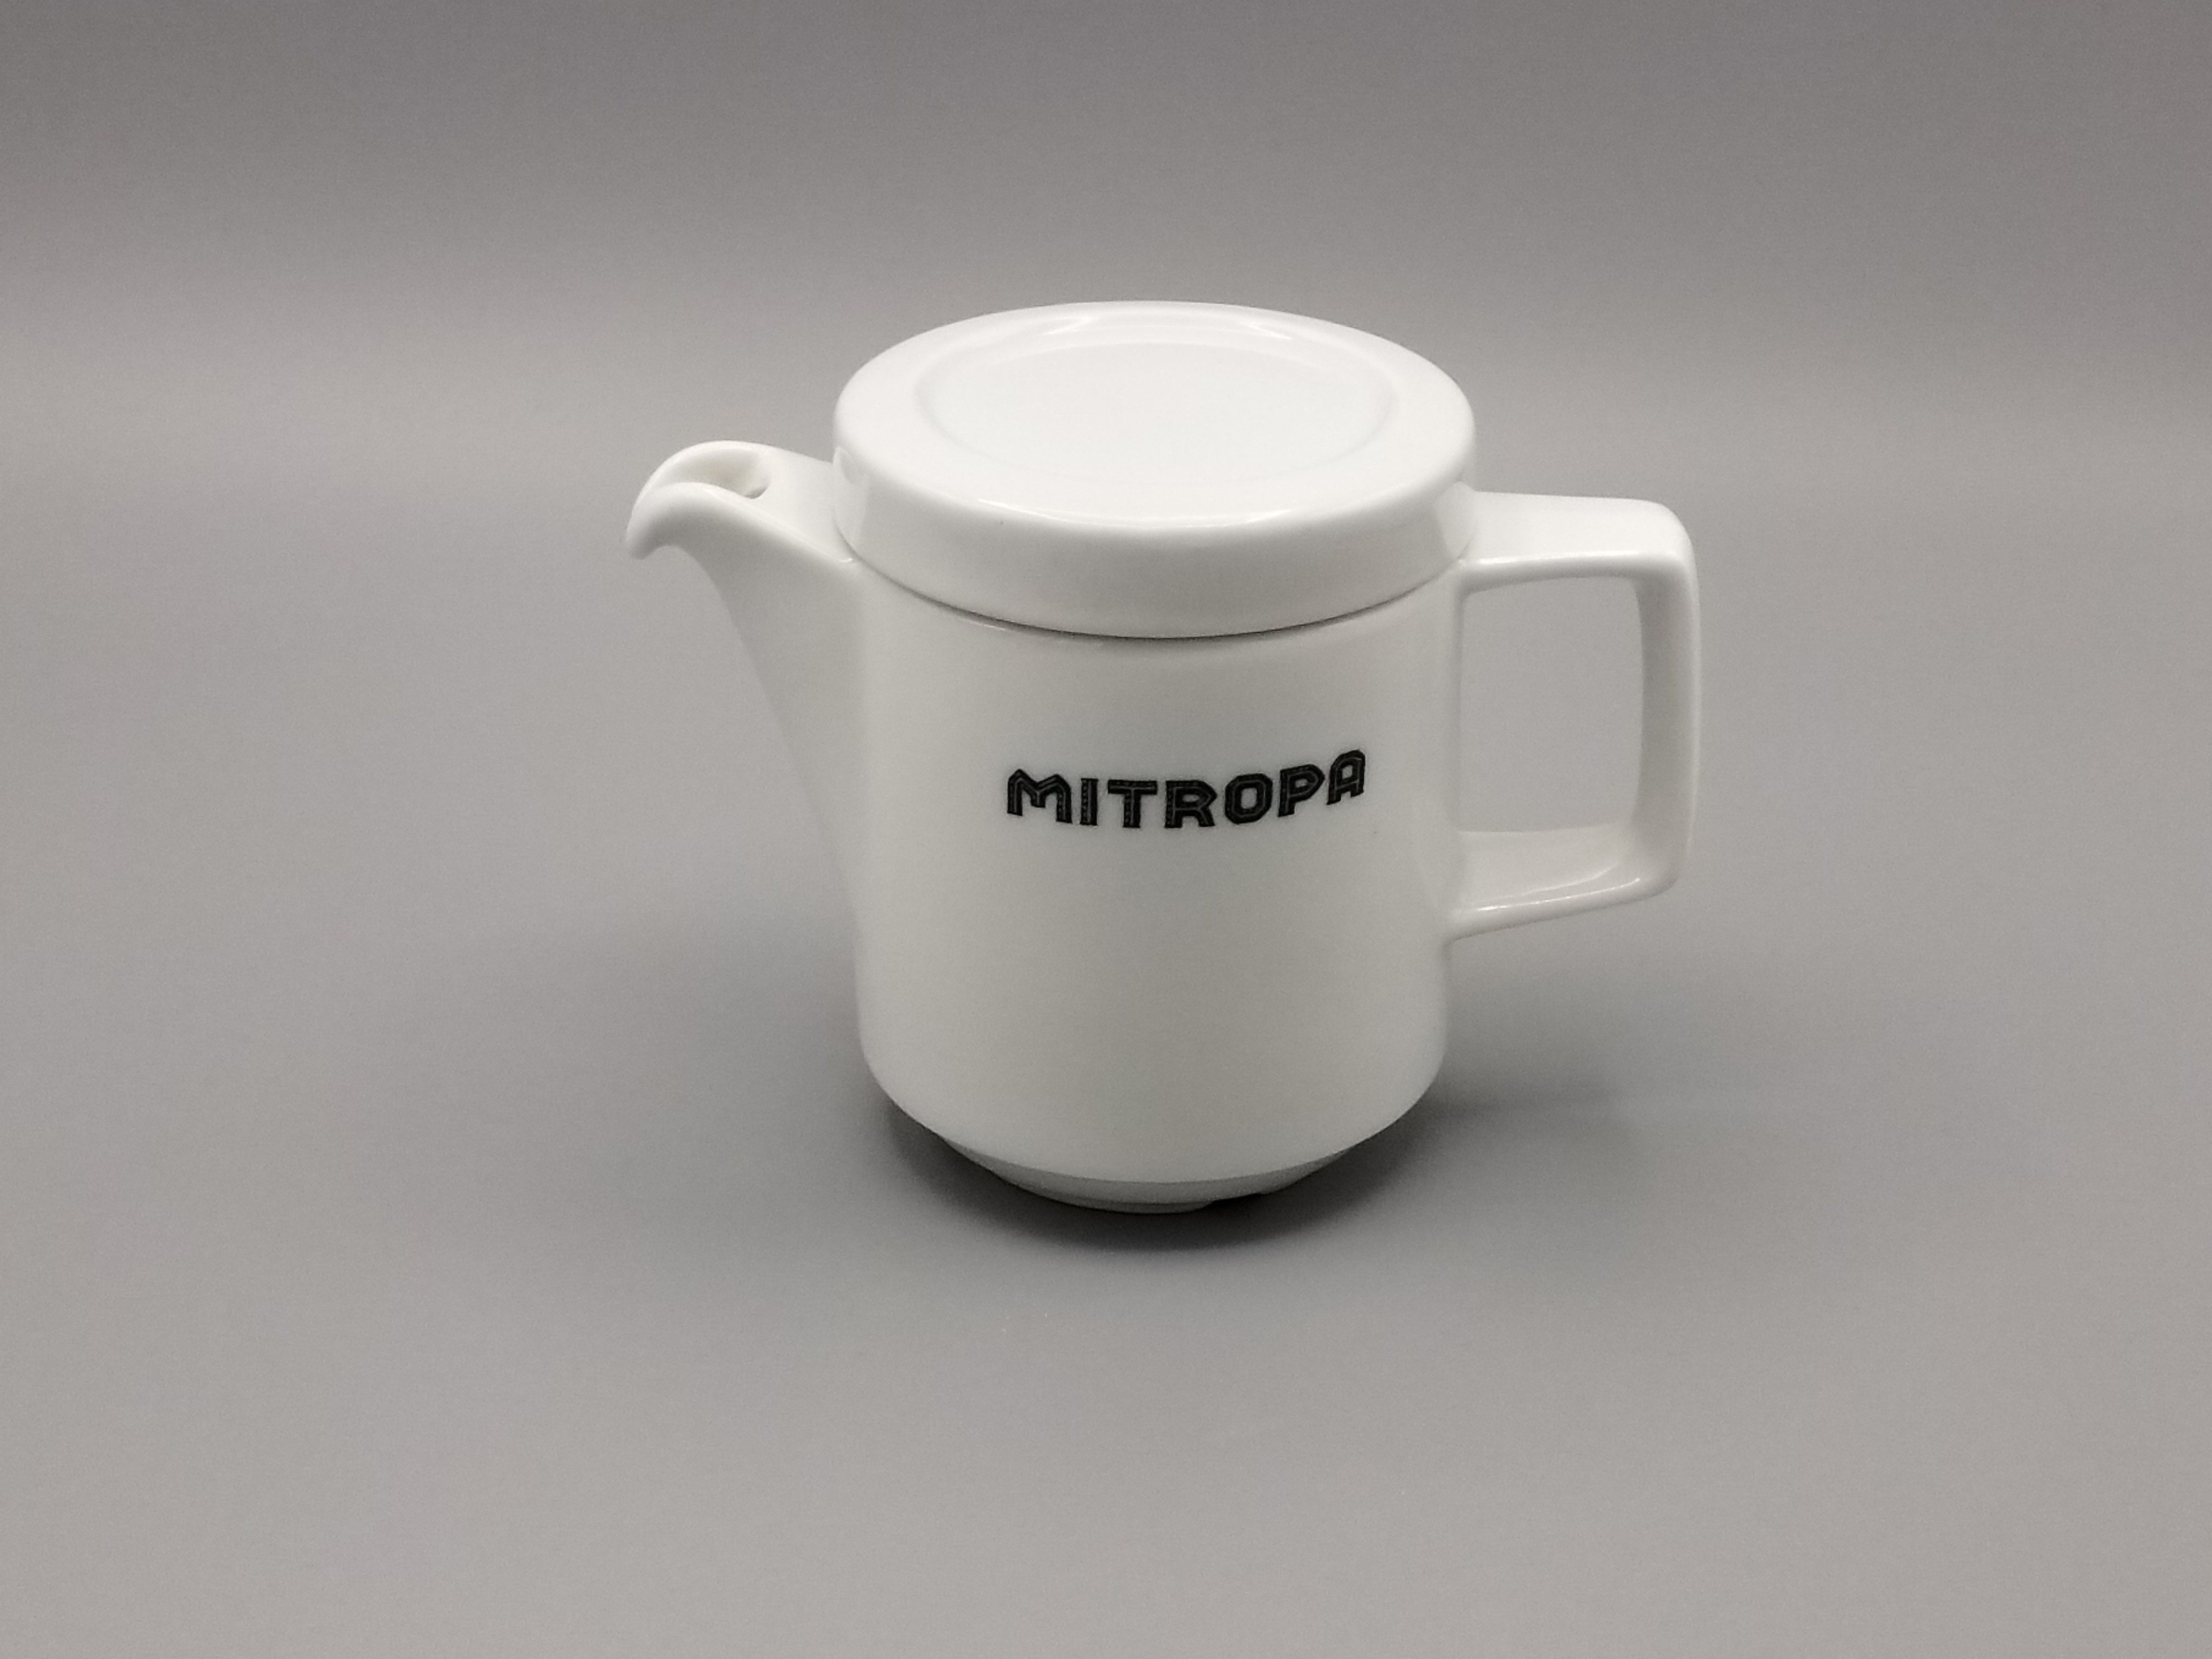 MITROPA Kännchen 300 ml (Mobile Welten e.V. CC BY-SA)